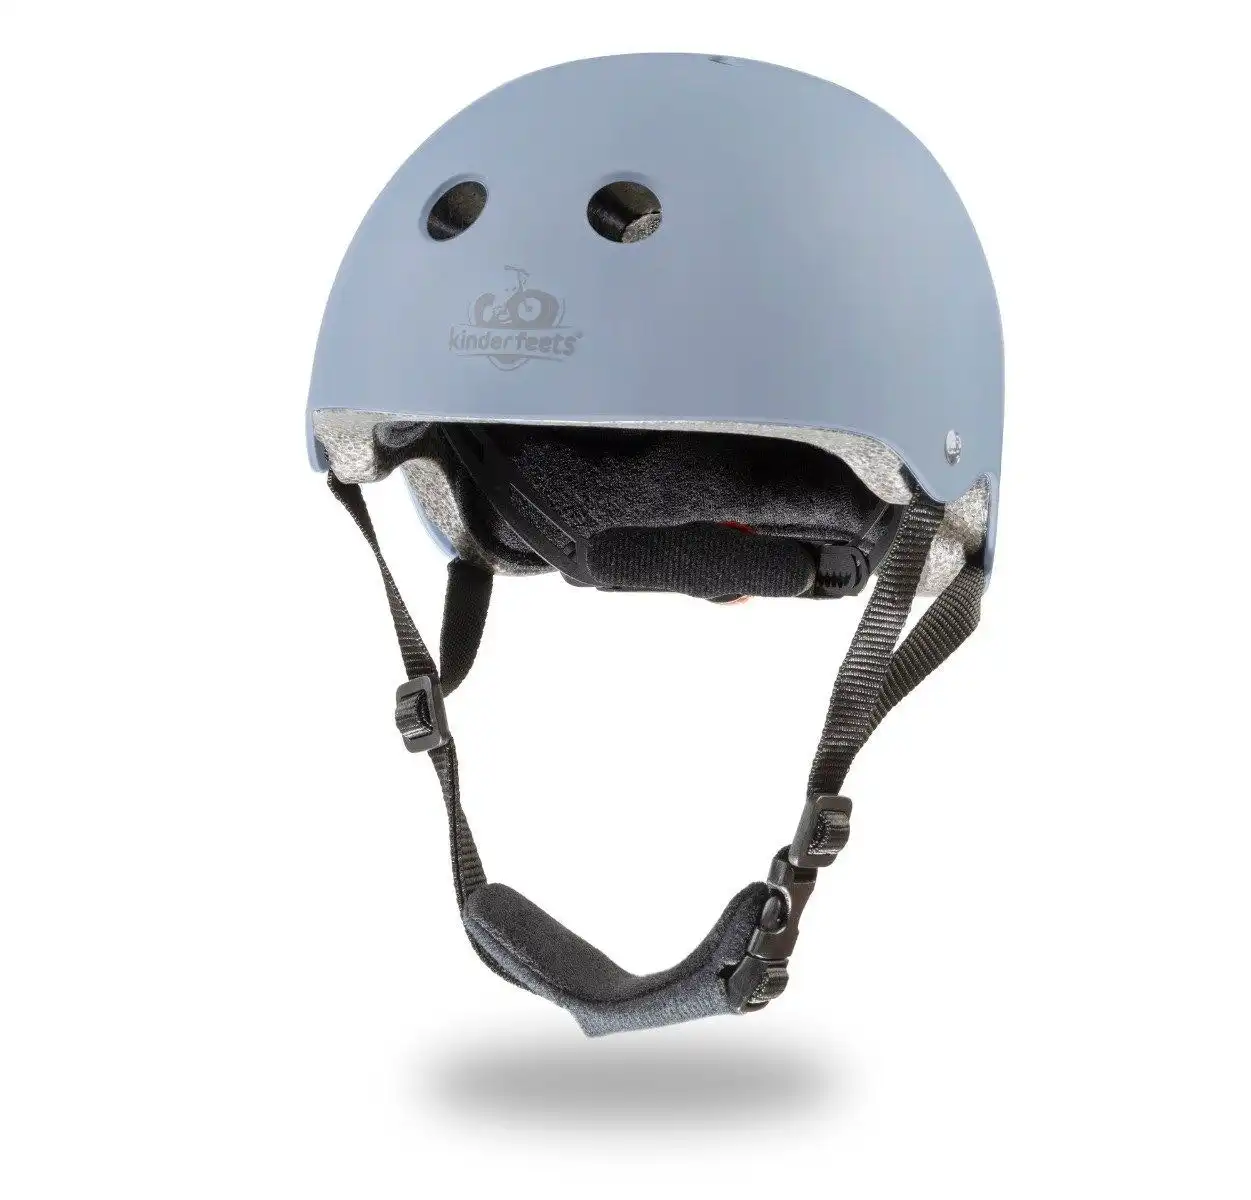 Kinderfeets Toddler Bike Helmet Matte Slate Blue